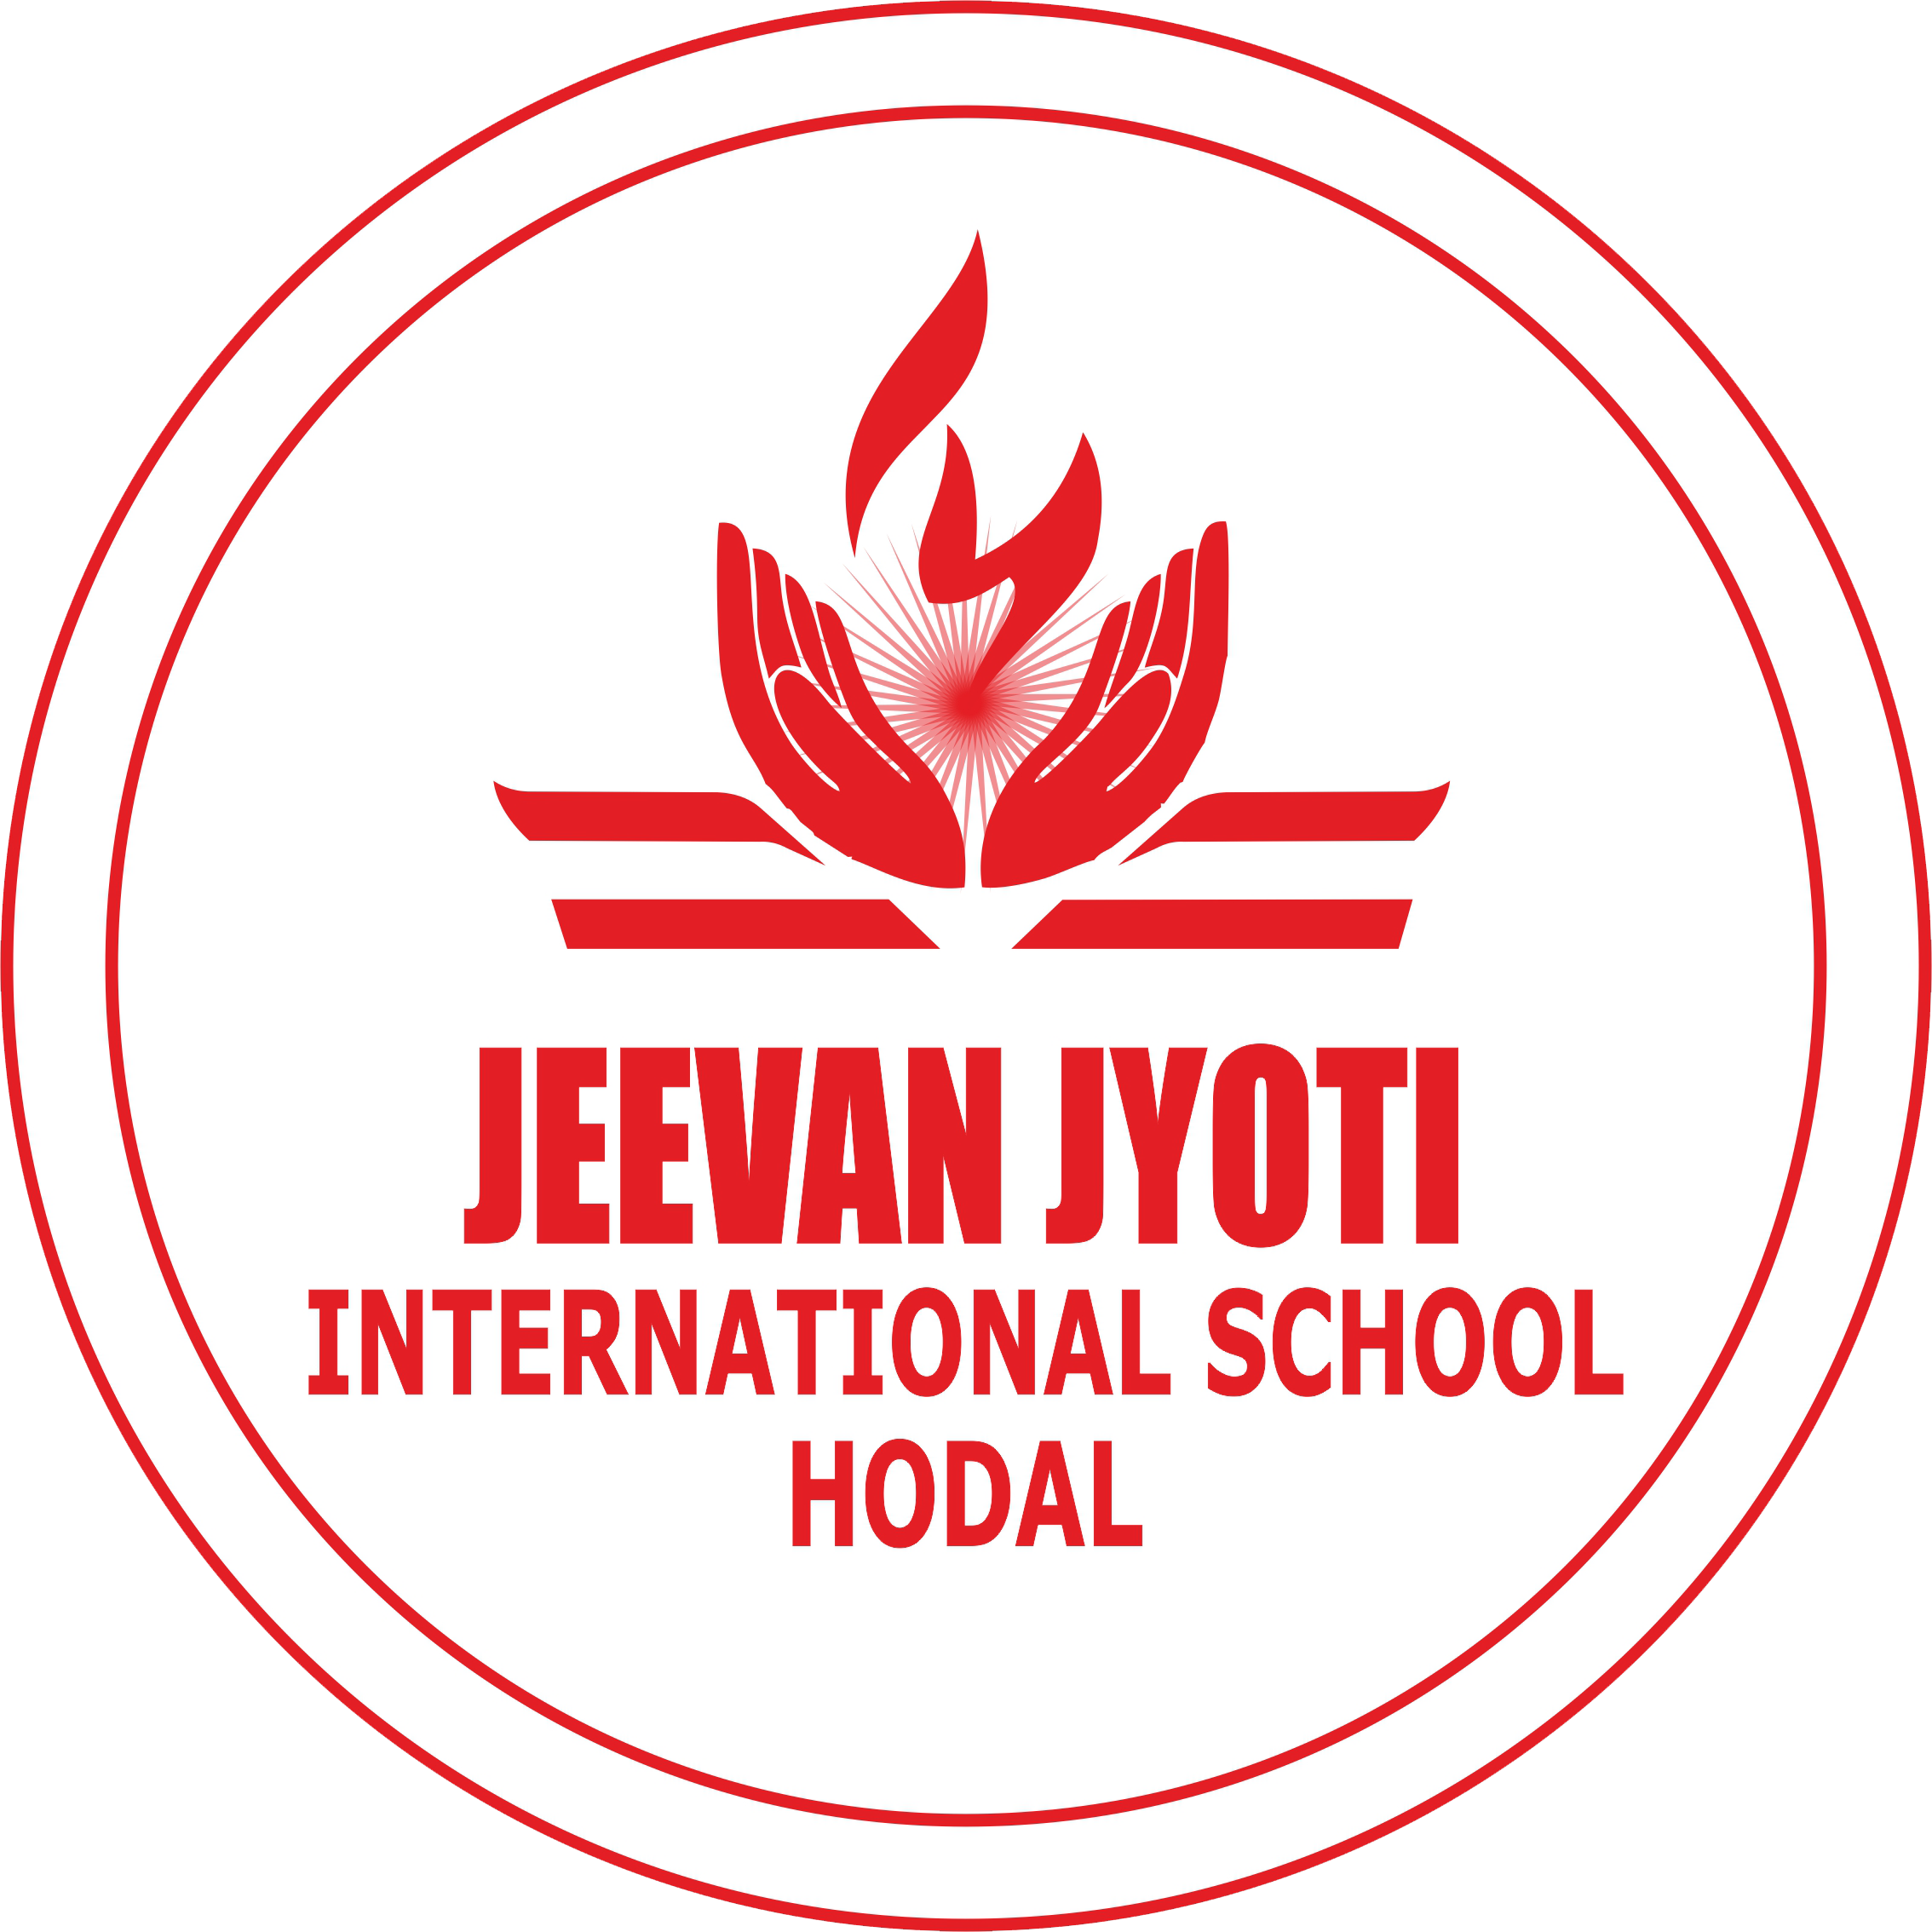 Jeevan Jyoti International School